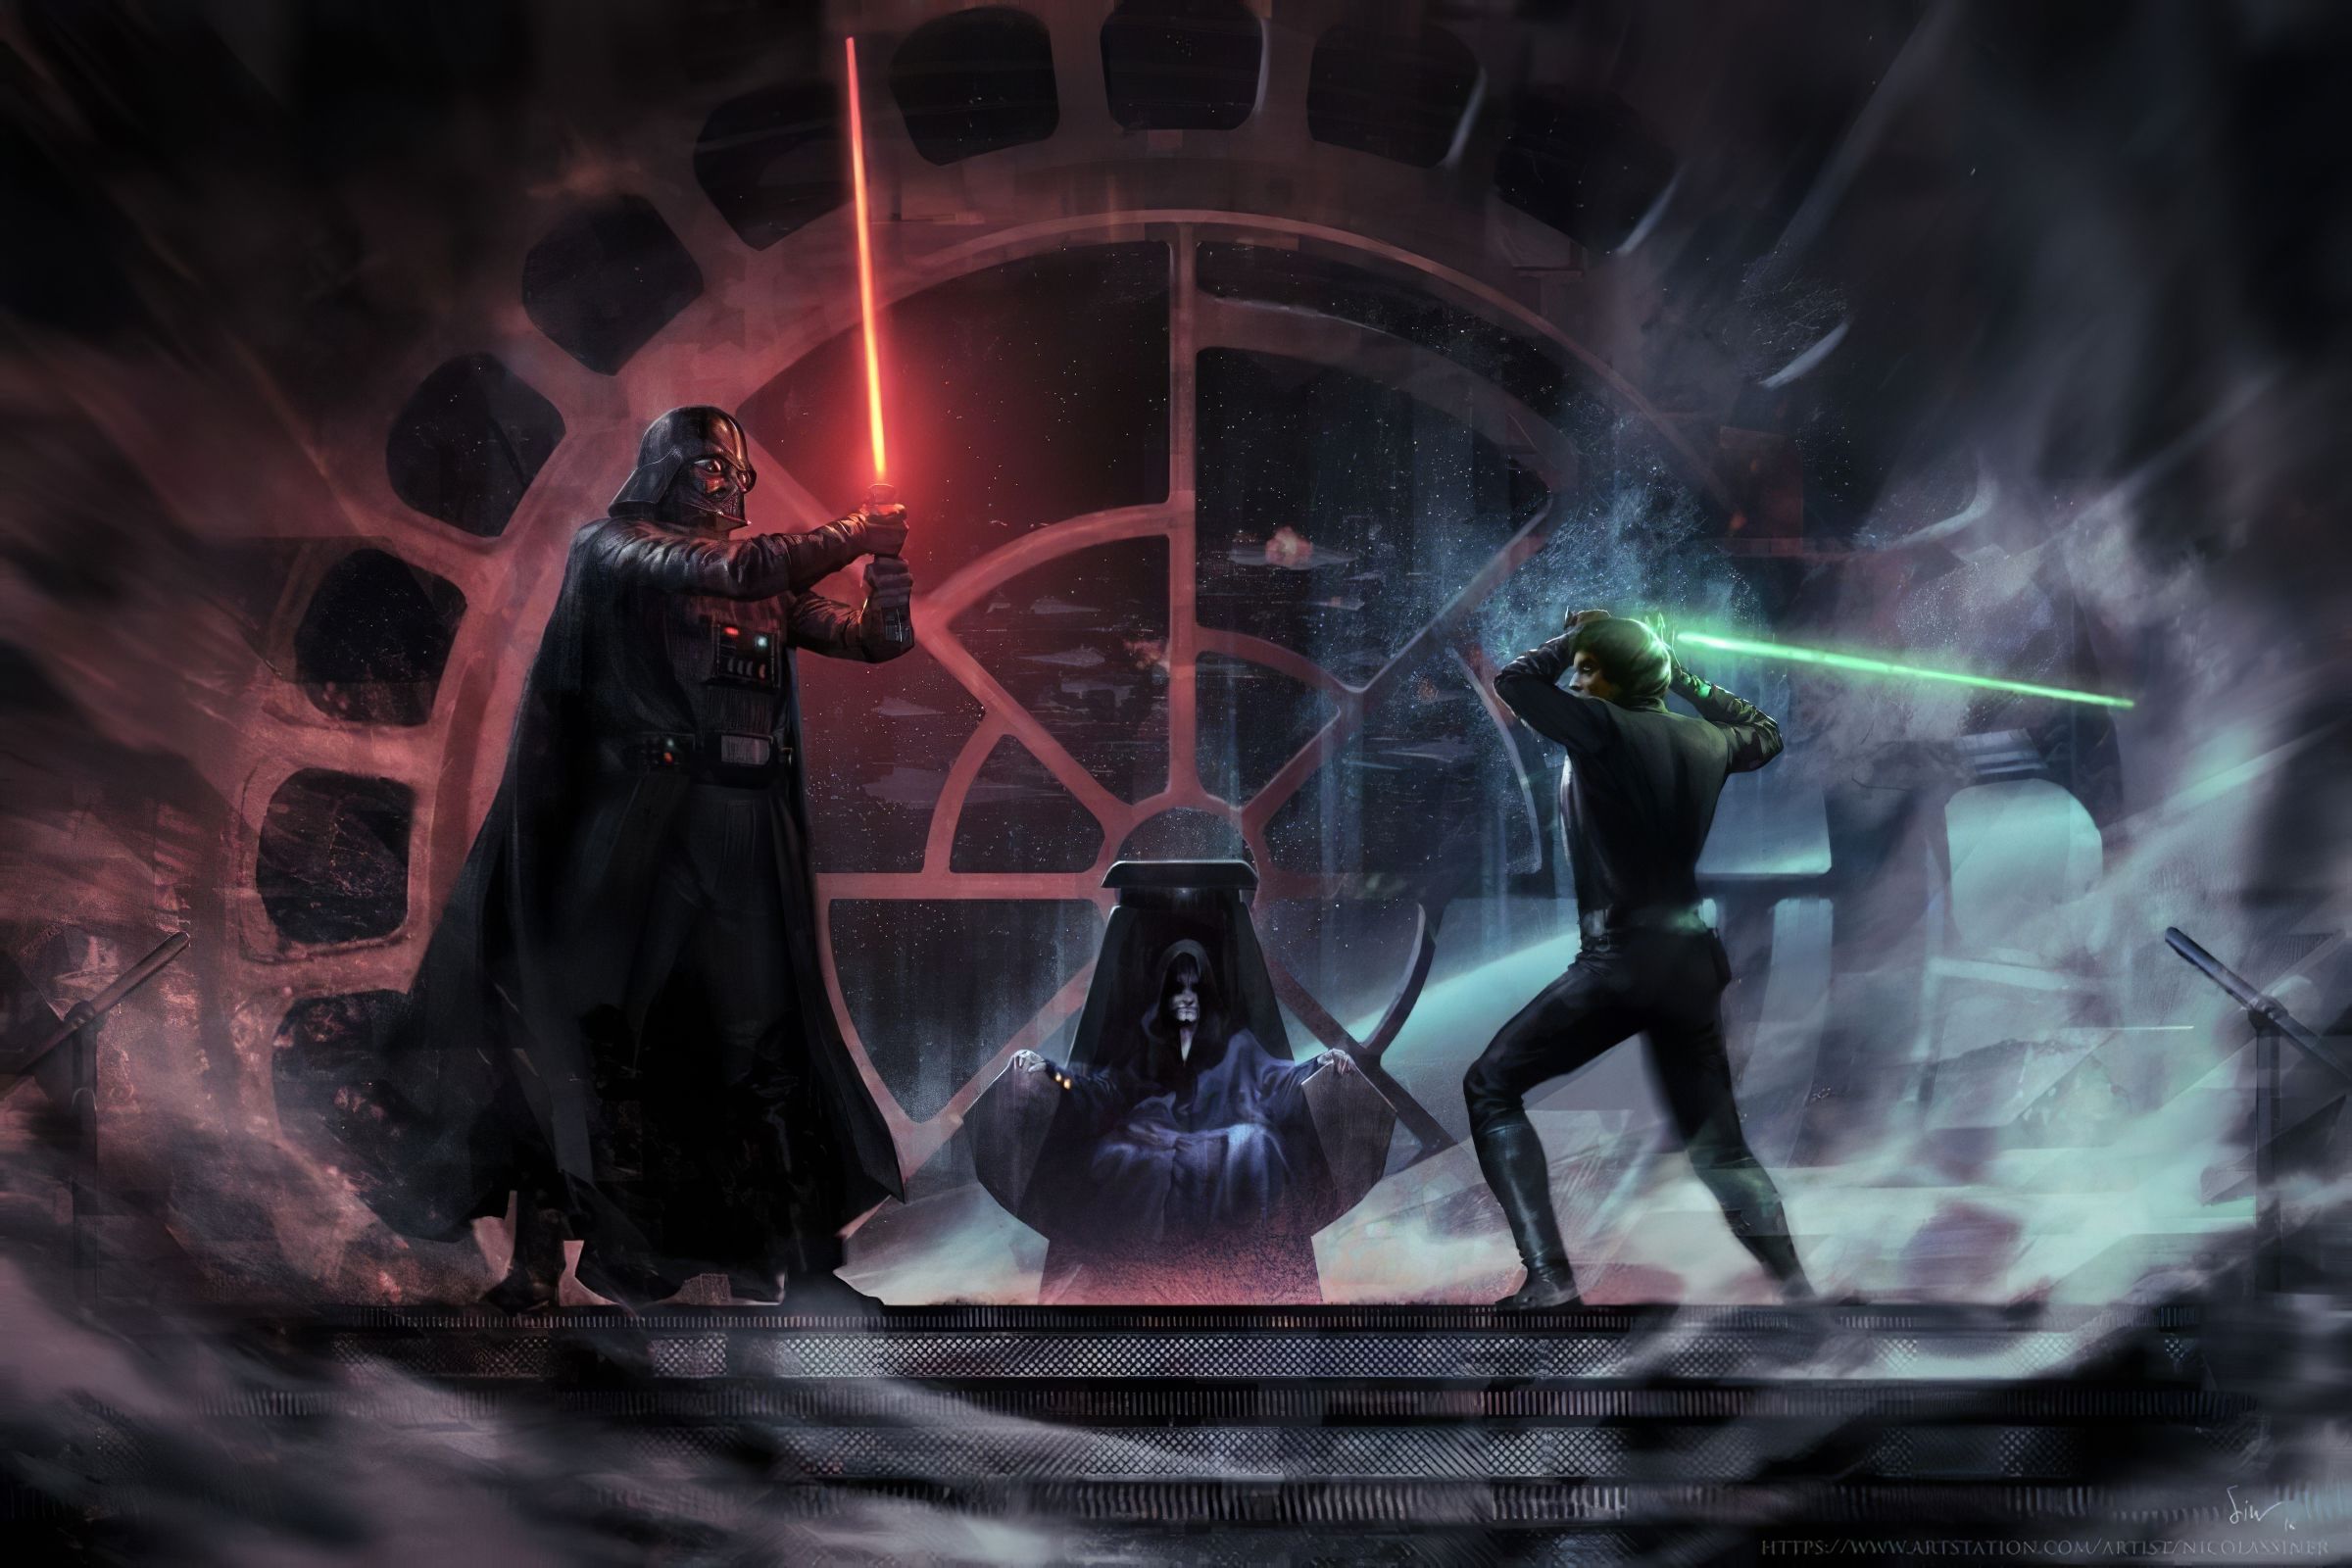 Darth Vader and Luke Skywalker Wallpaper Free Darth Vader and Luke Skywalker Background